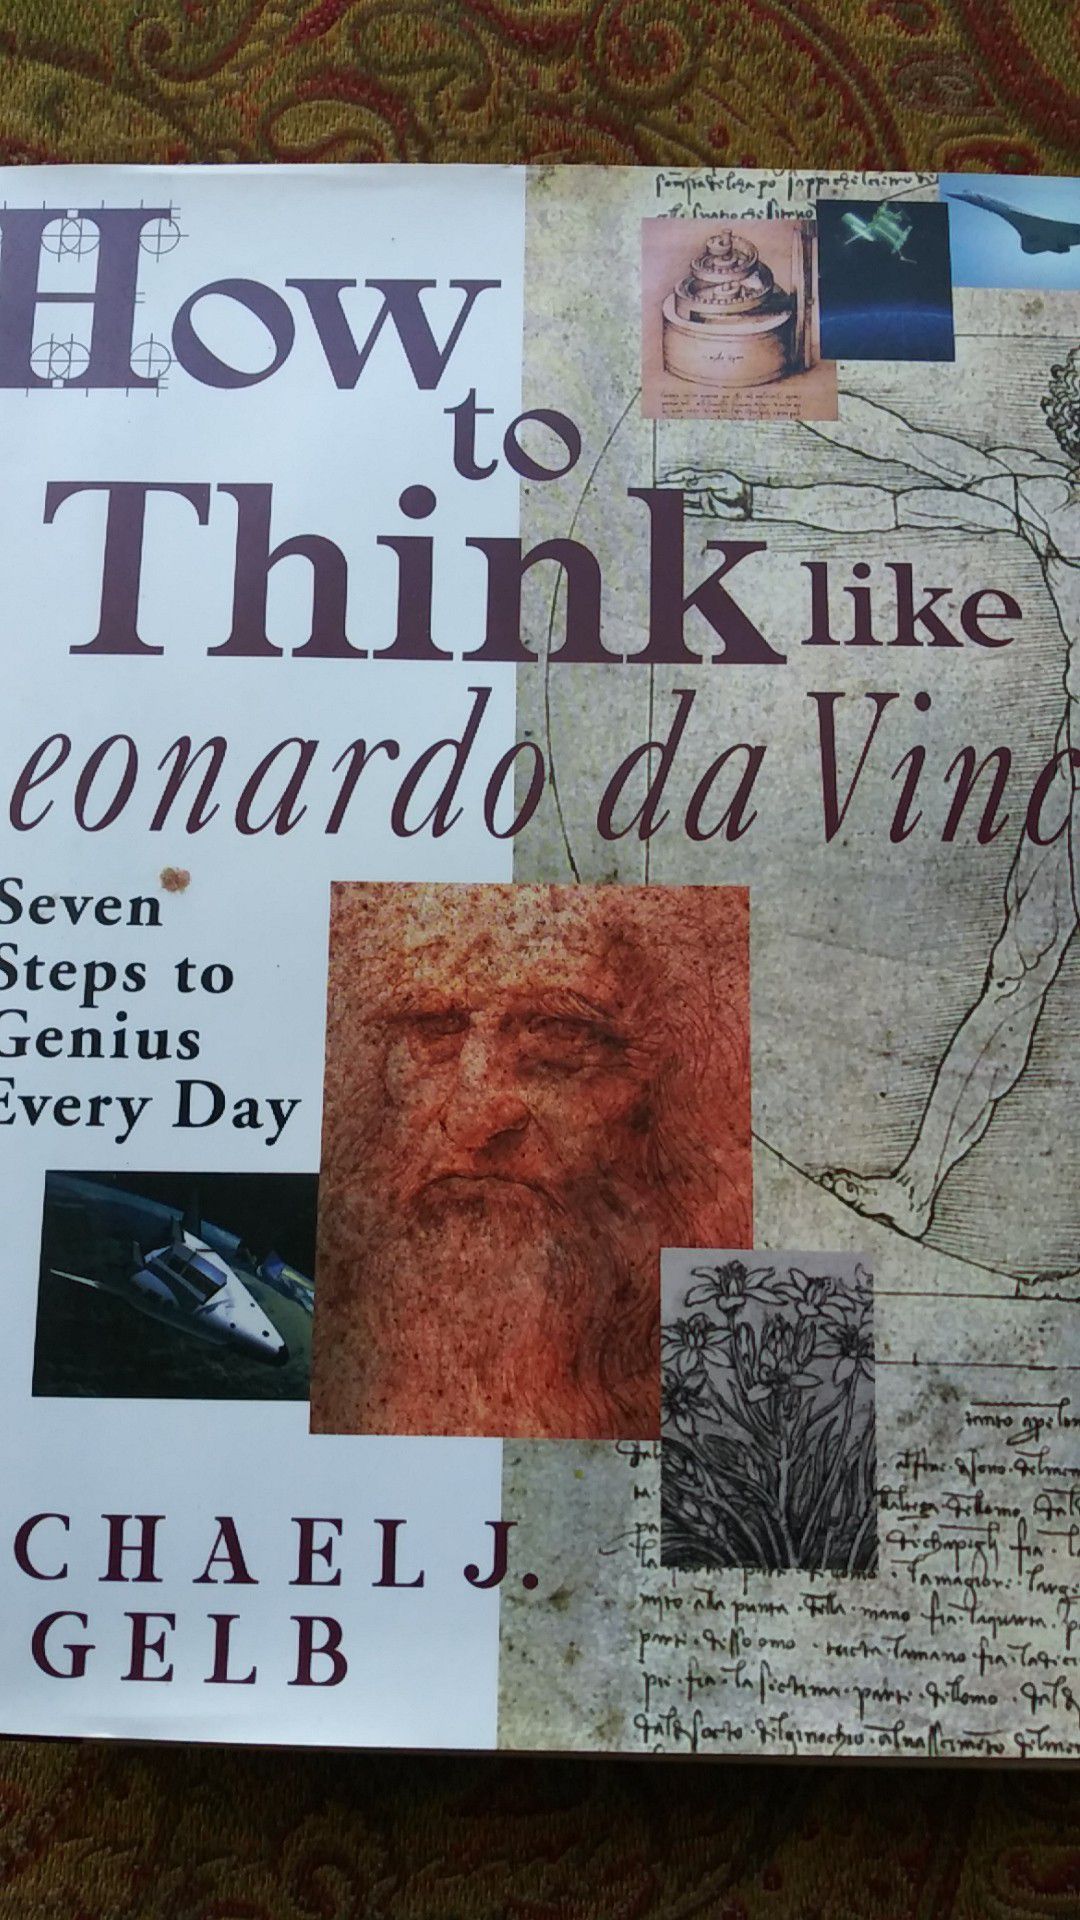 Book: how to think like Leonardo da Vinci